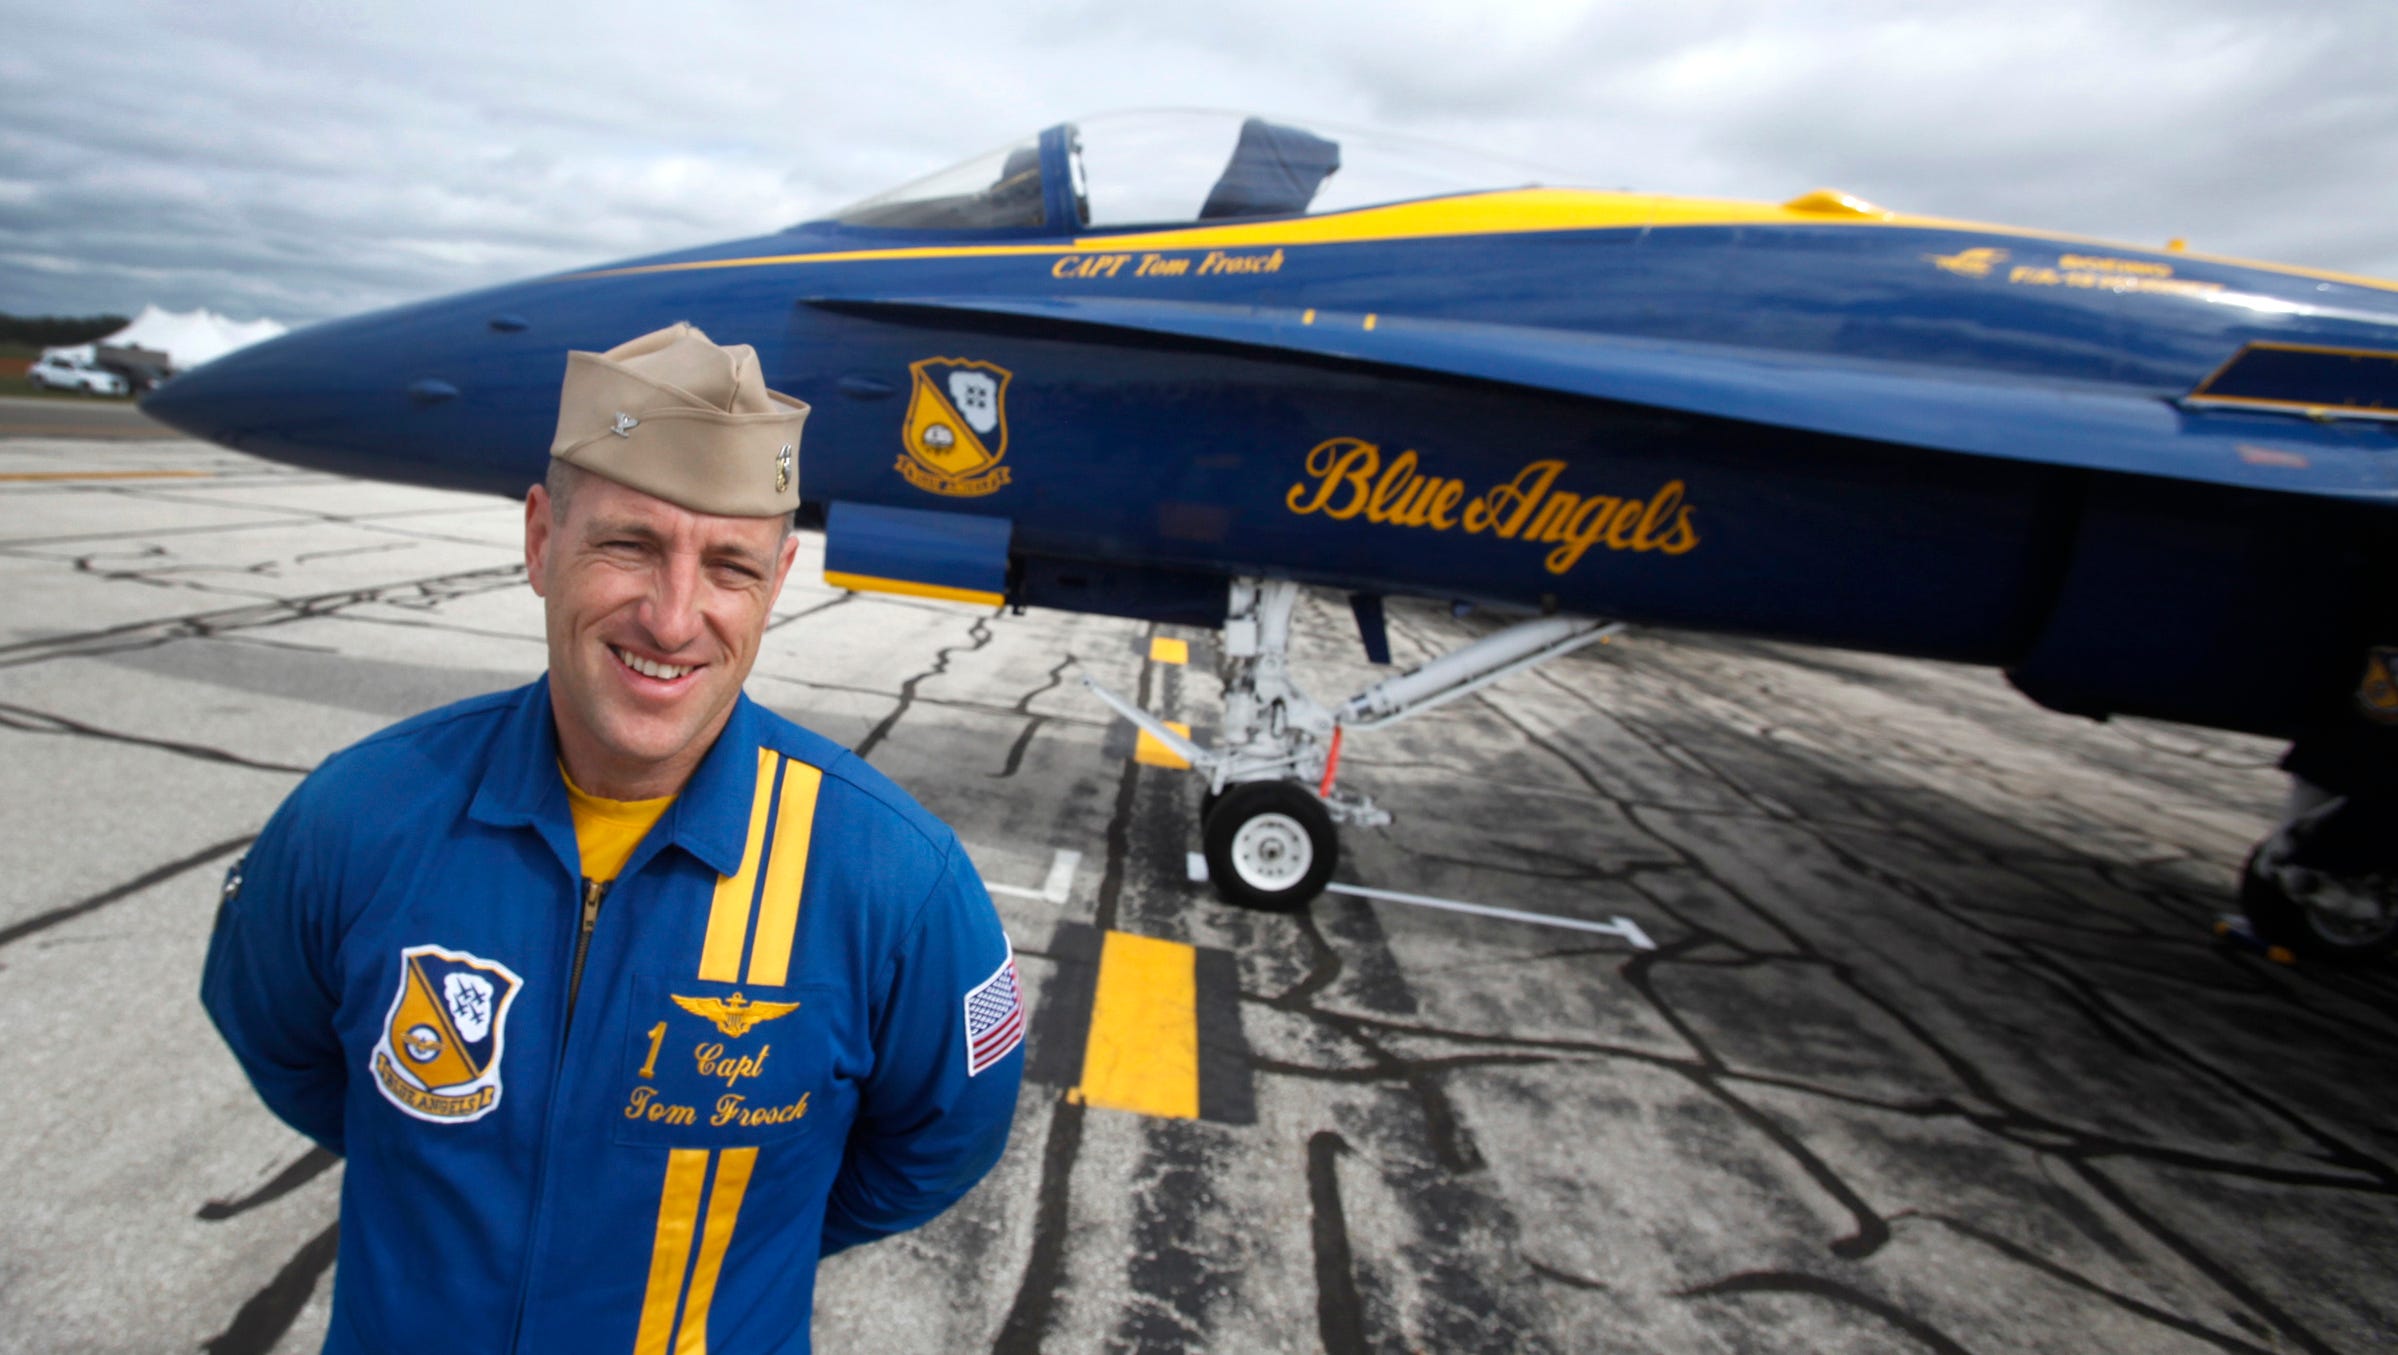 Macomb man fulfills dream of flying as Blue Angels pilot